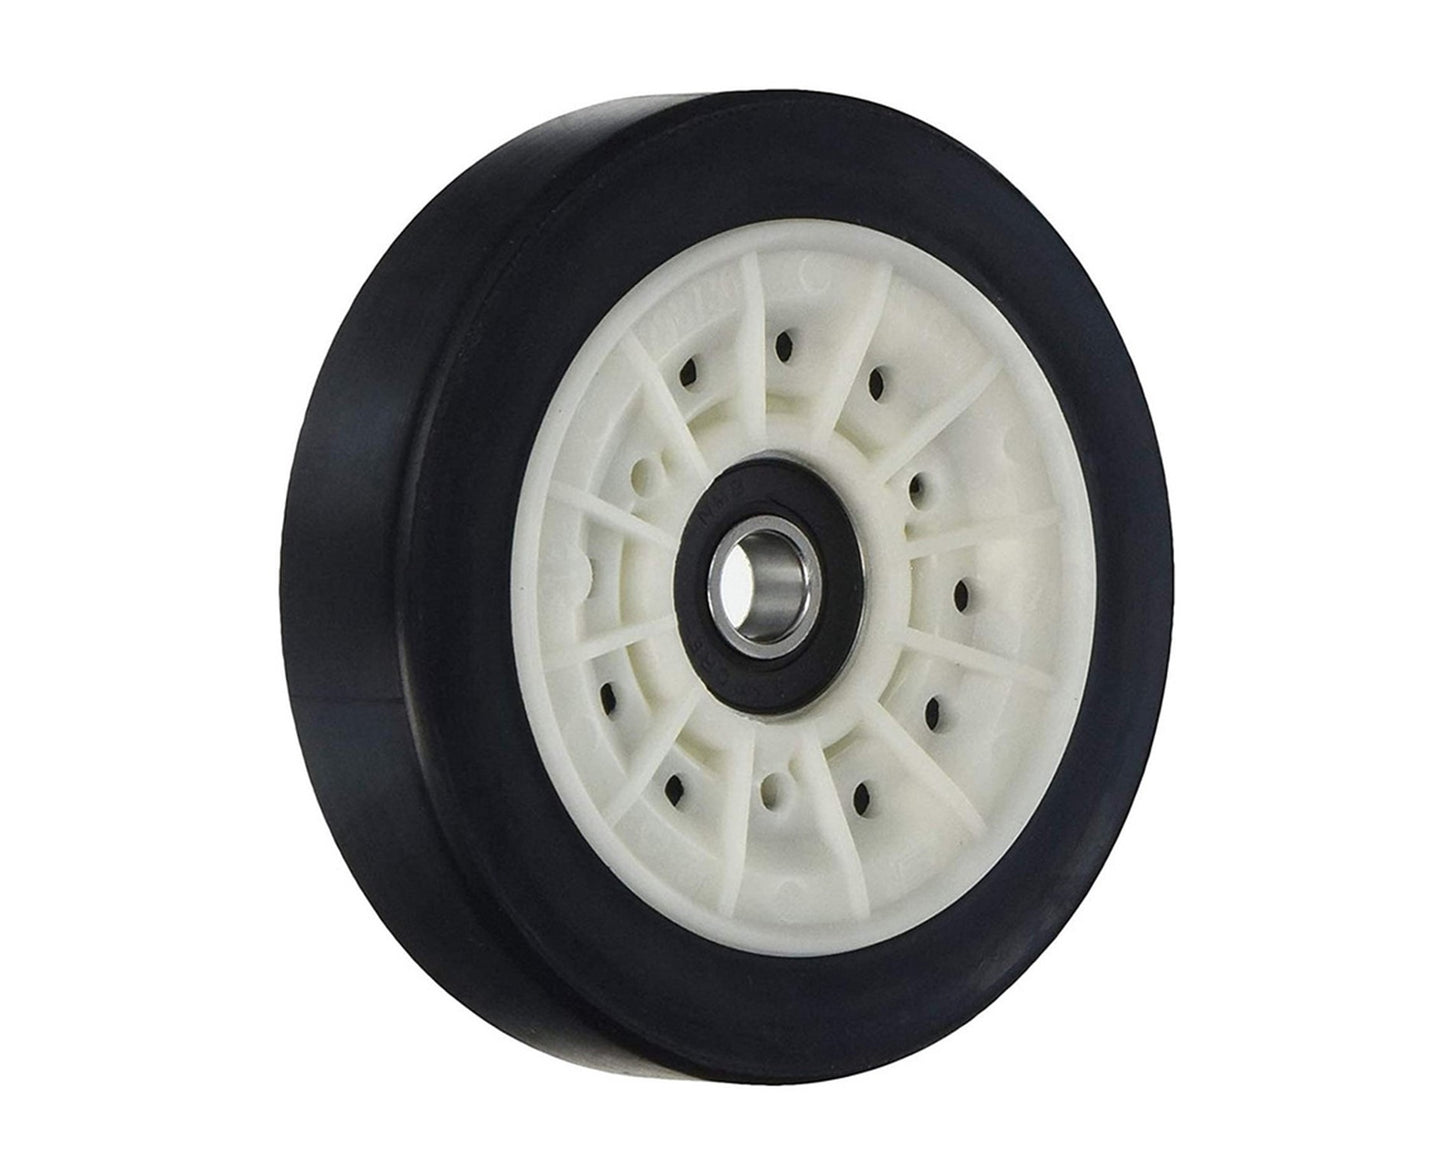 Tumble Dryer Drum Wheel Roller for Beko DC7041W, DC7110W, DCU6130S, DCU9331GX